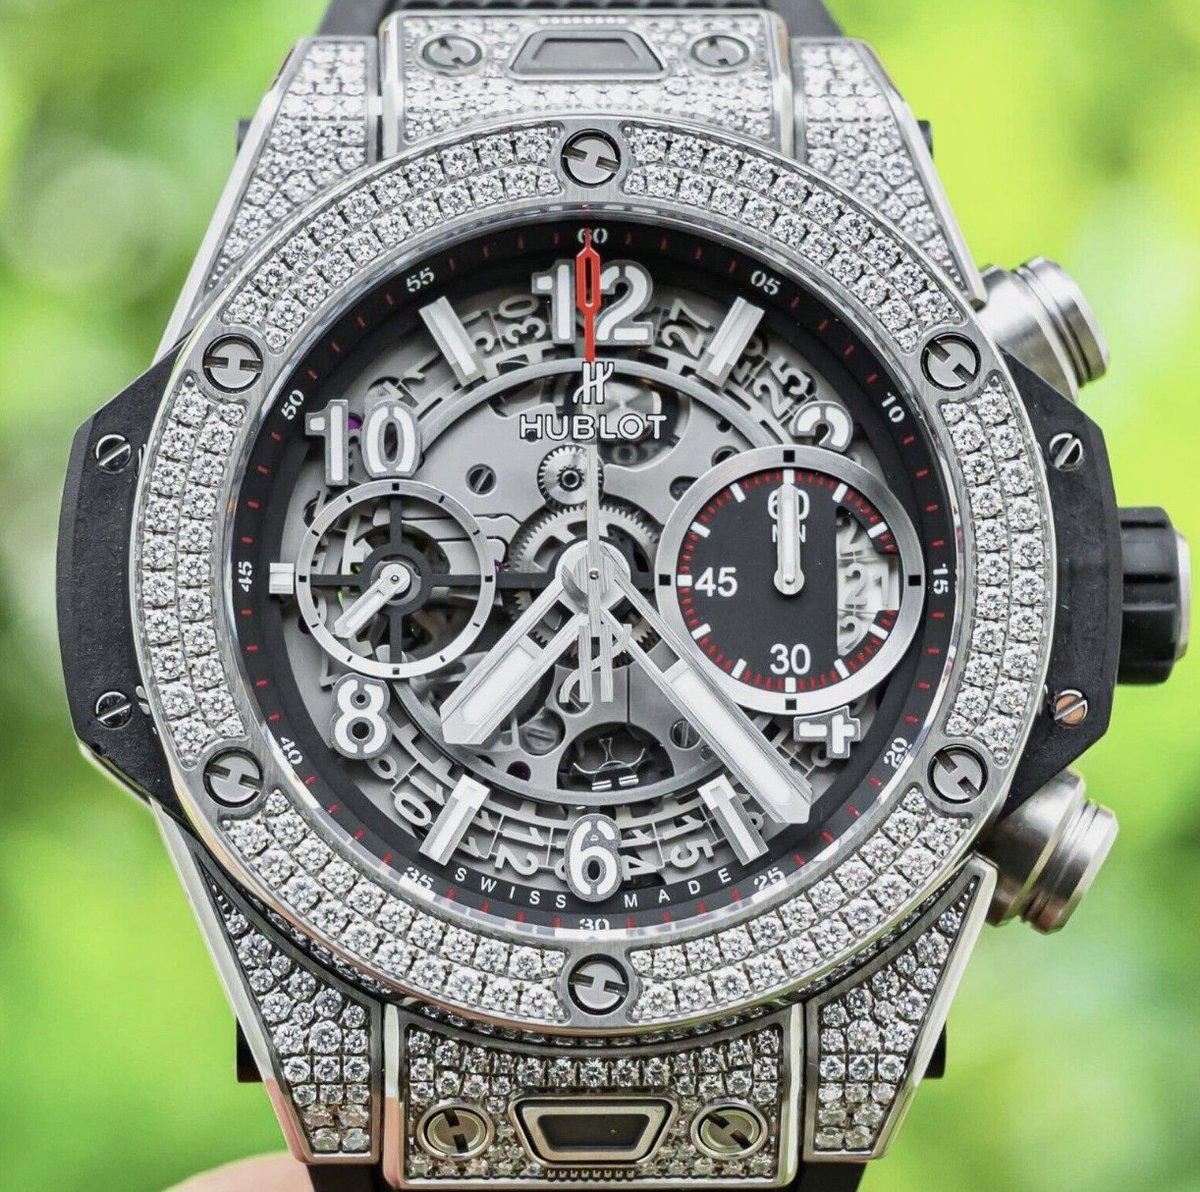 Hublot Big Bang Unico Titanium Pave Diamonds 42 mm $35K MSRP 441.NX.1170.RX.1704

For sale by @sivils_luxury

21,995

#hublot #watches #valueyourwatch #watchmarketplace #luxury #luxurylife #entrereneur #luxurywatch #luxurywatches #luxurydesign #businesswatch #watchfam